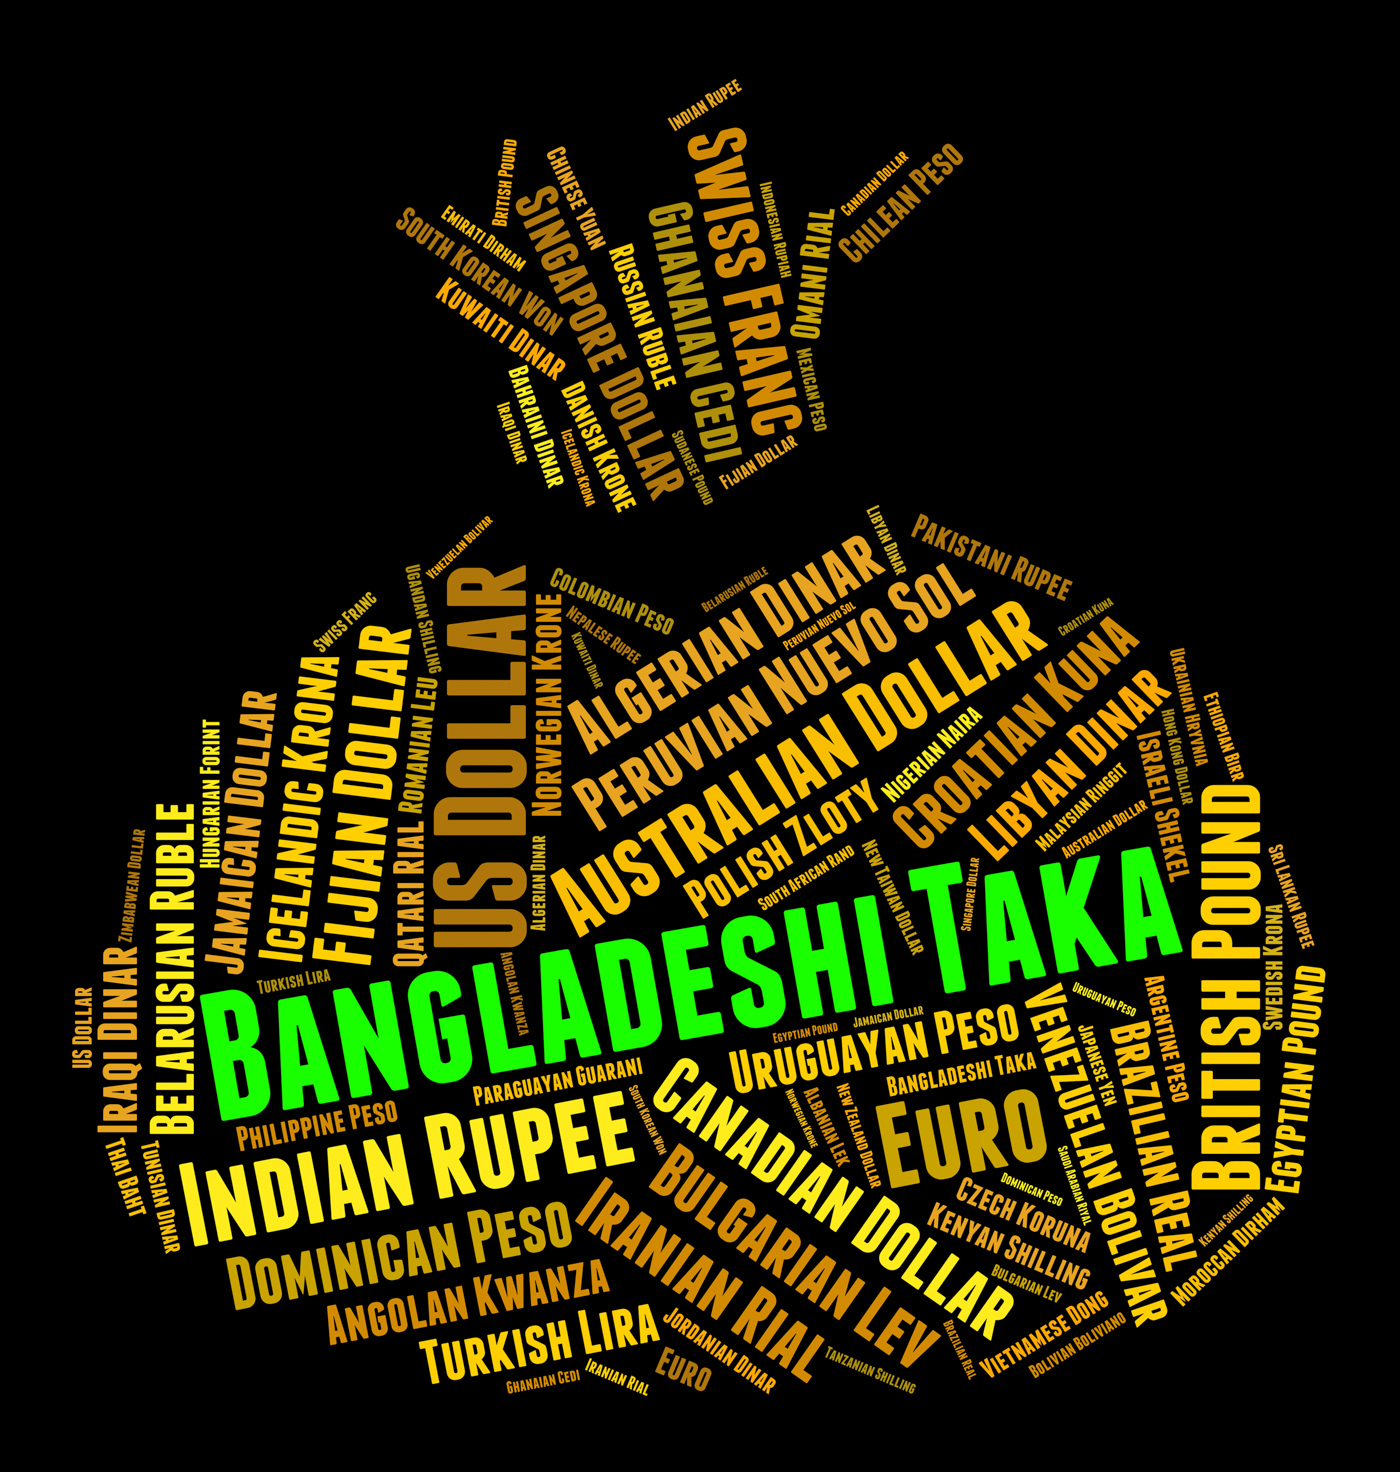 Bangladeshi Taka Represents Currency Exchange And Coinage, Bangladeshi, Foreign, Words, Wordcloud, HQ Photo